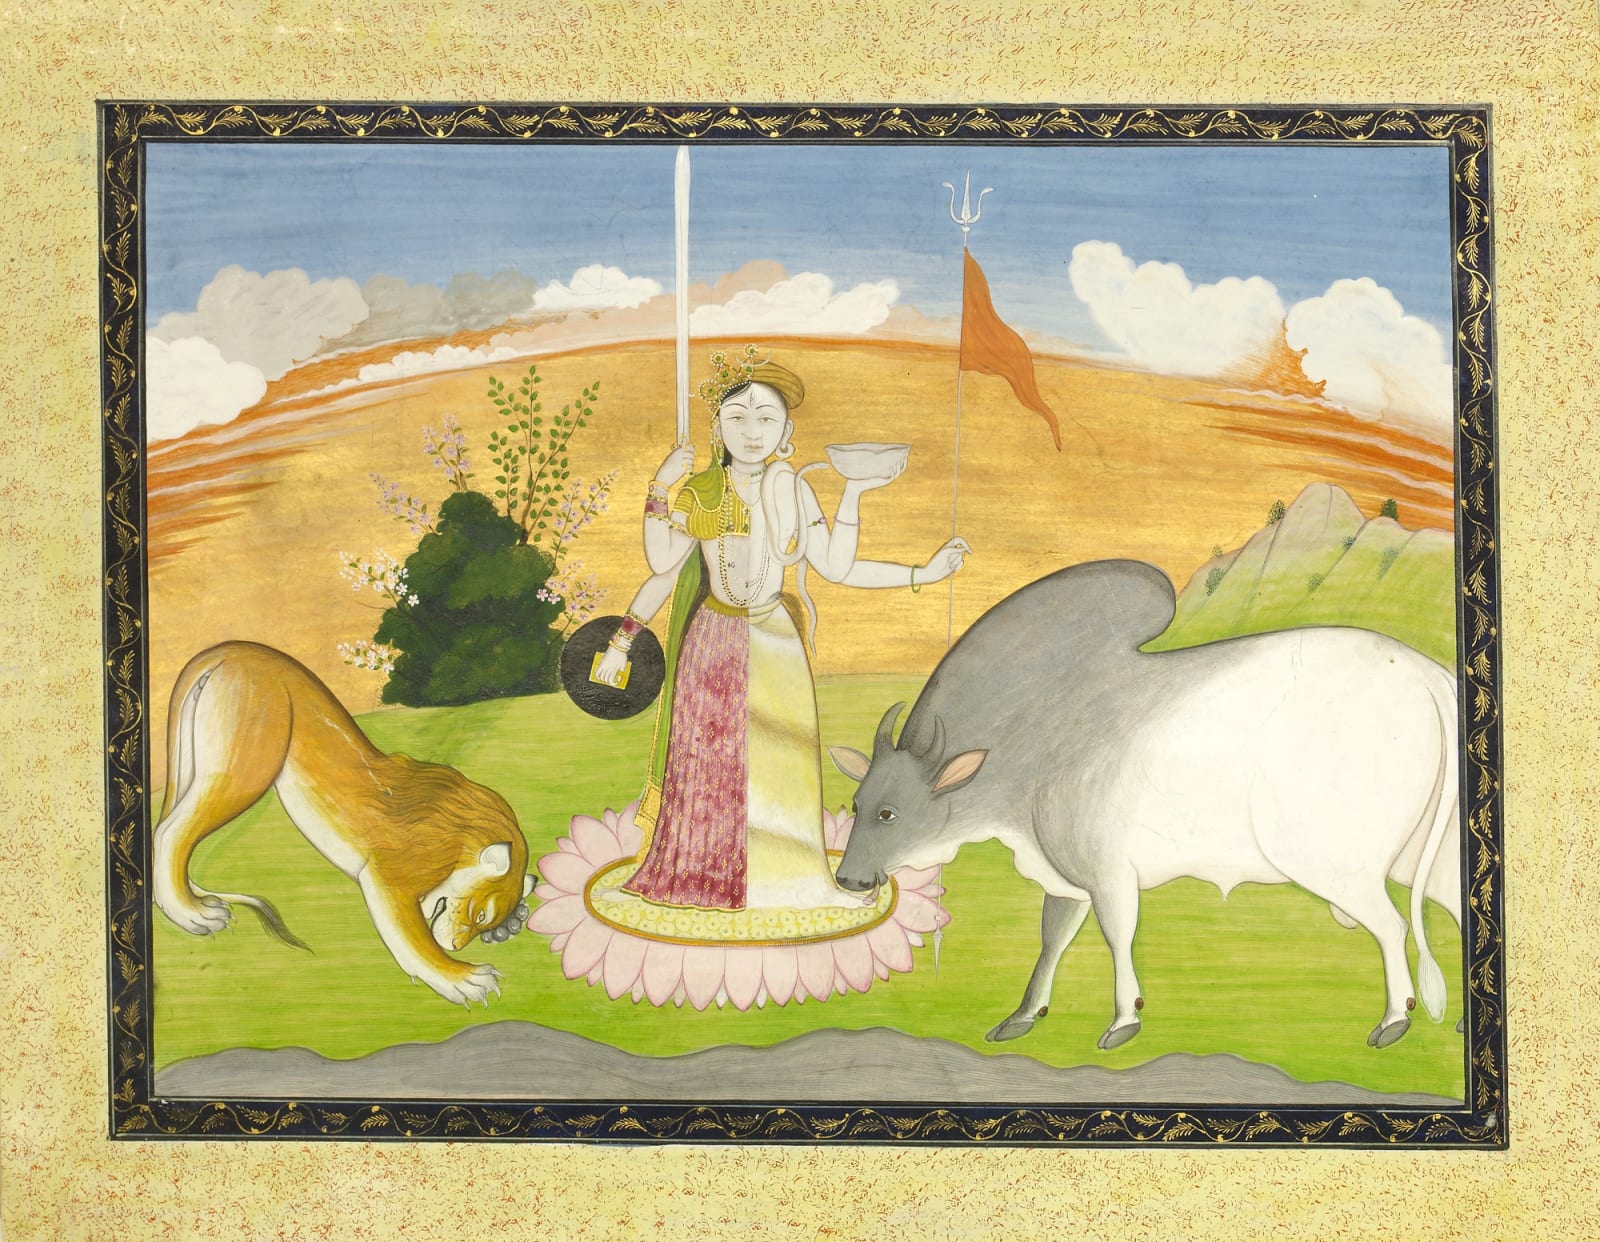 Siva as Ardhanarisvara, Guler, c. 1810